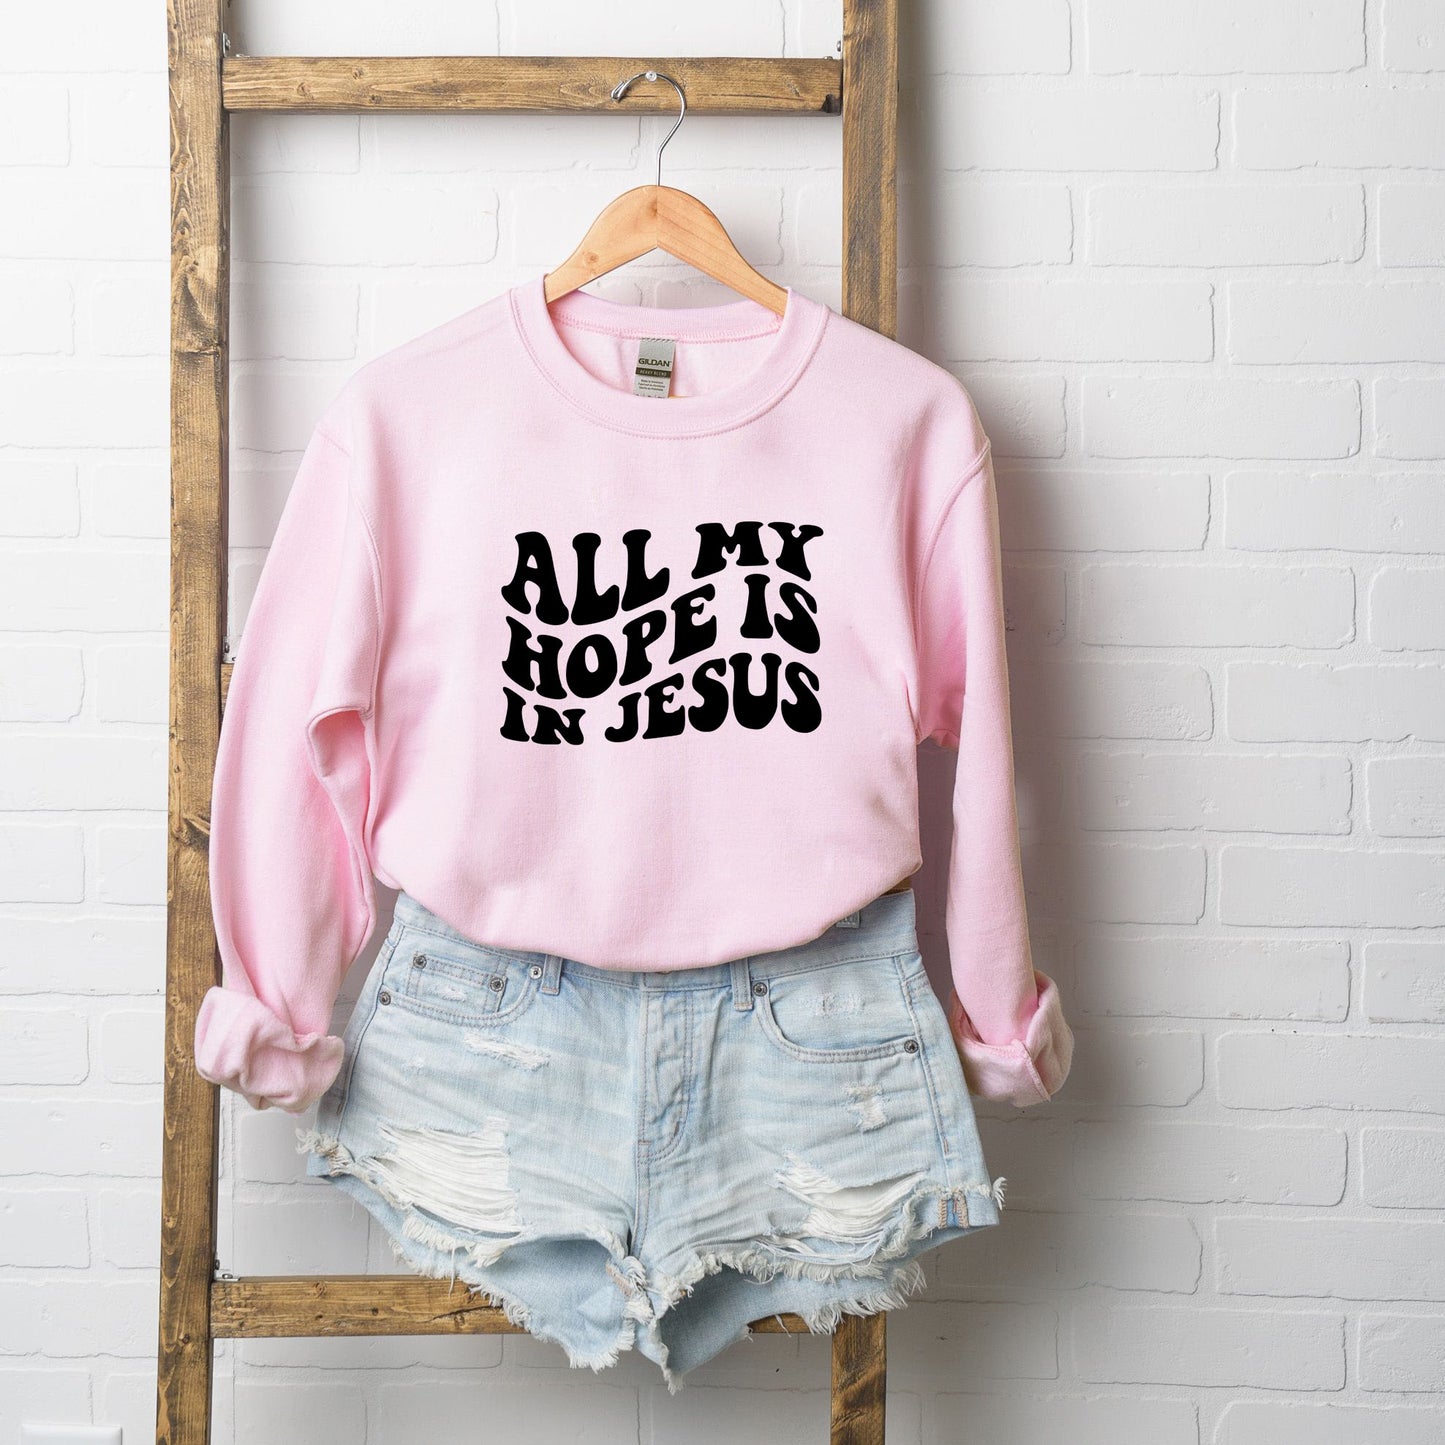 All My Hope Is In Jesus Wavy | Sweatshirt